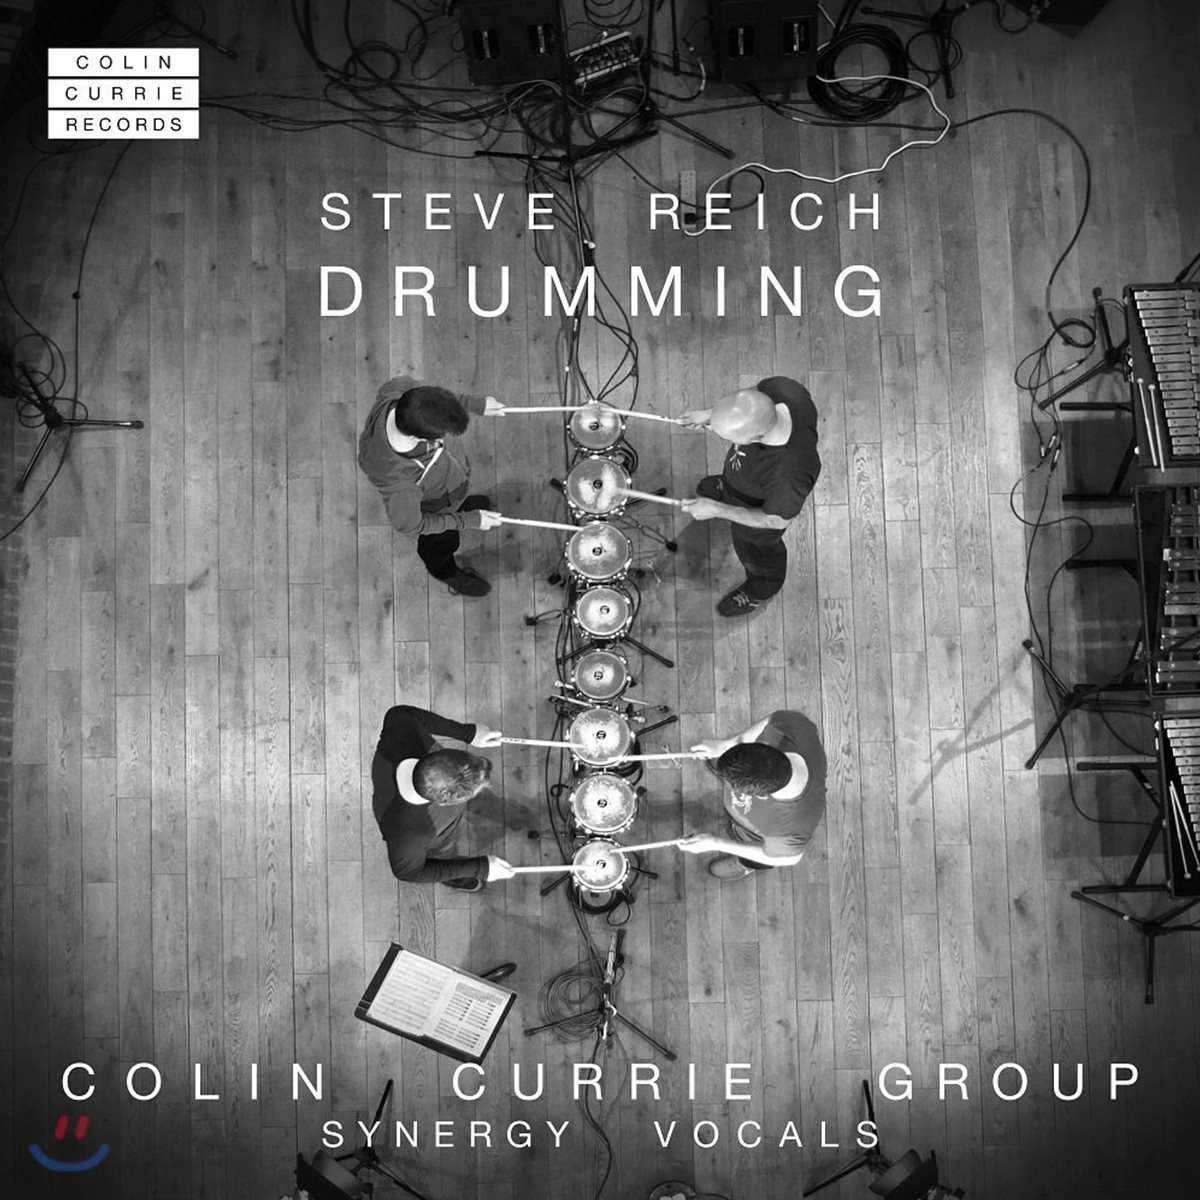 Colin Currie Group 스티브 라이히: 드러밍 (Steve Reich: Drumming)